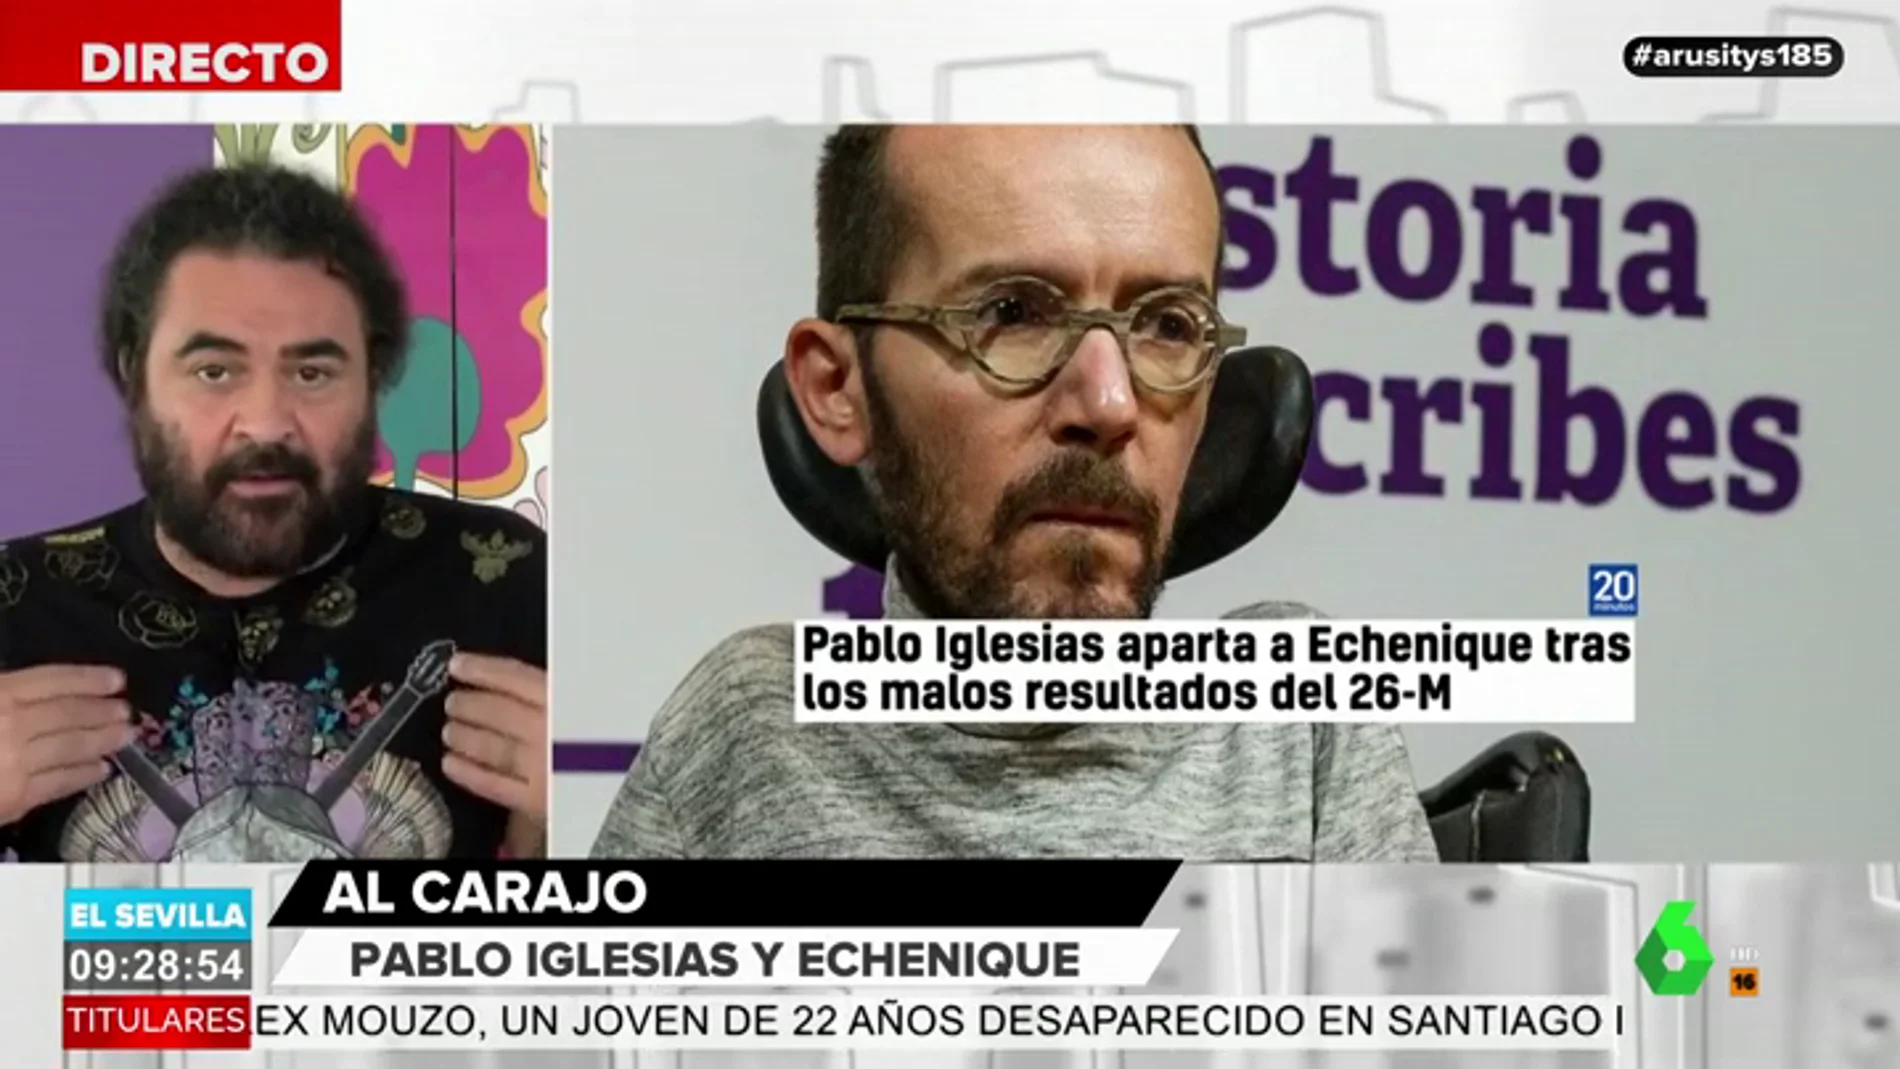 El análisis de El Sevilla sobre Podemos